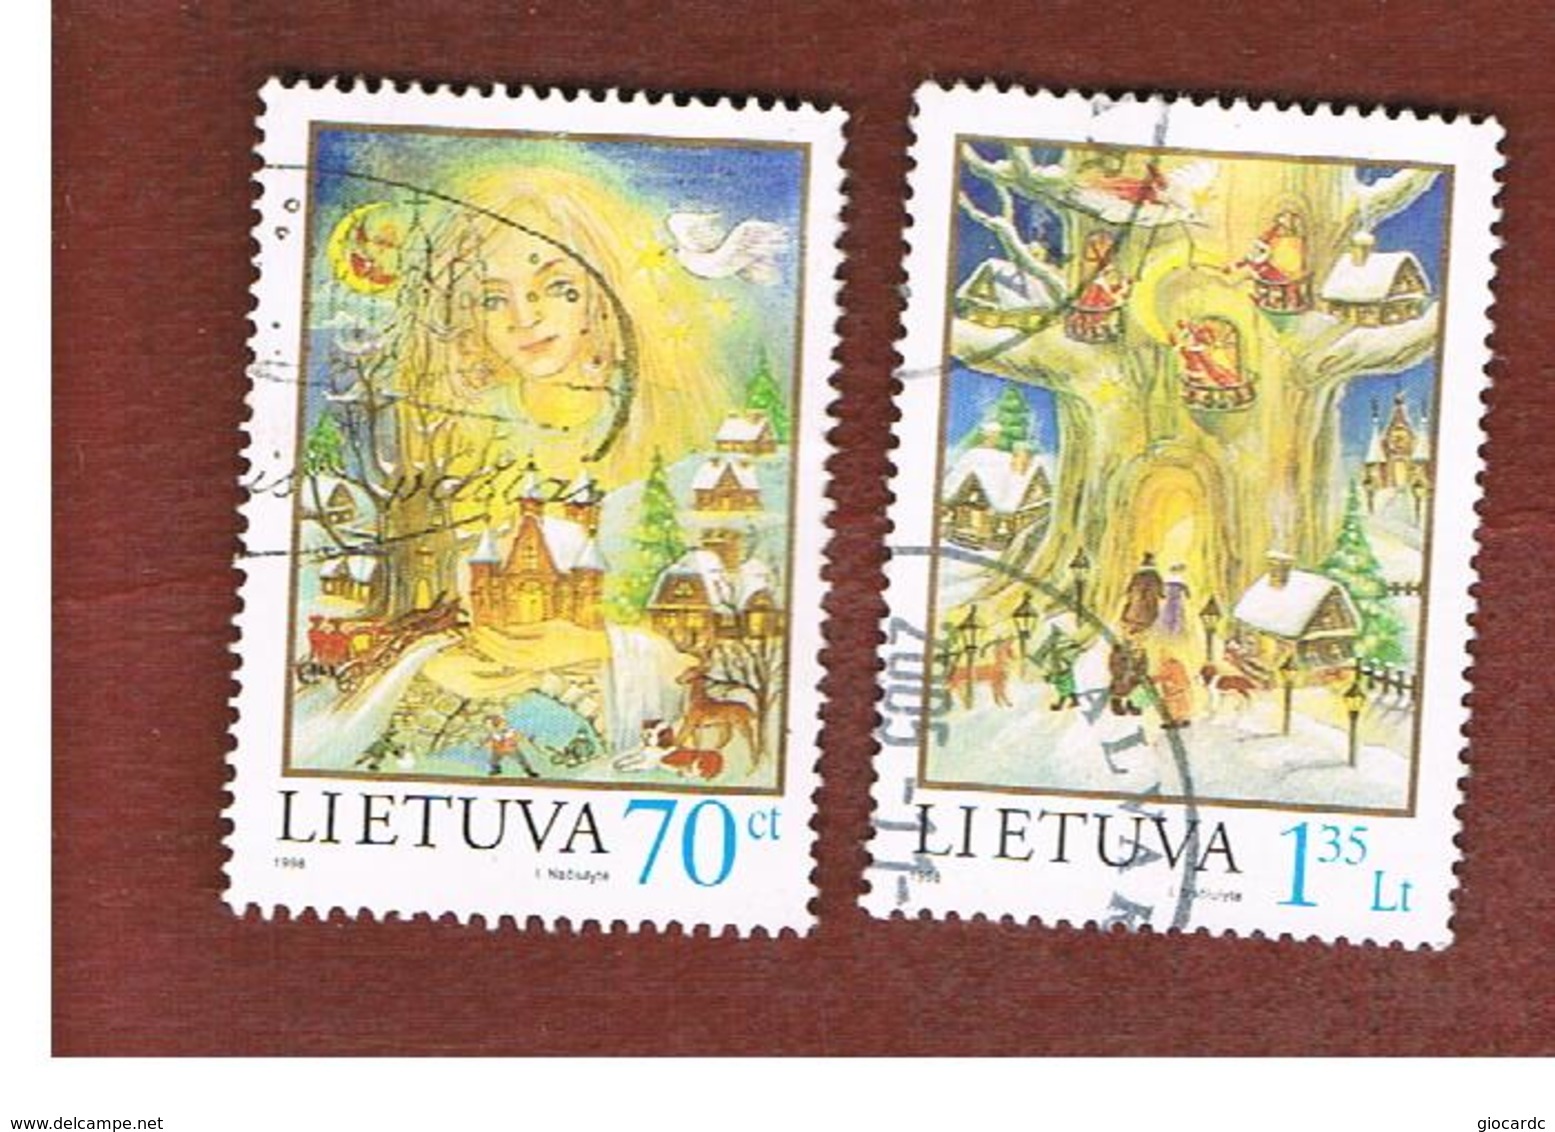 LITUANIA (LITHUANIA)   - SG  689.690  -        1998 CHRISTMAS (COMPLET SET OF 2)   -   USED - Lituanie